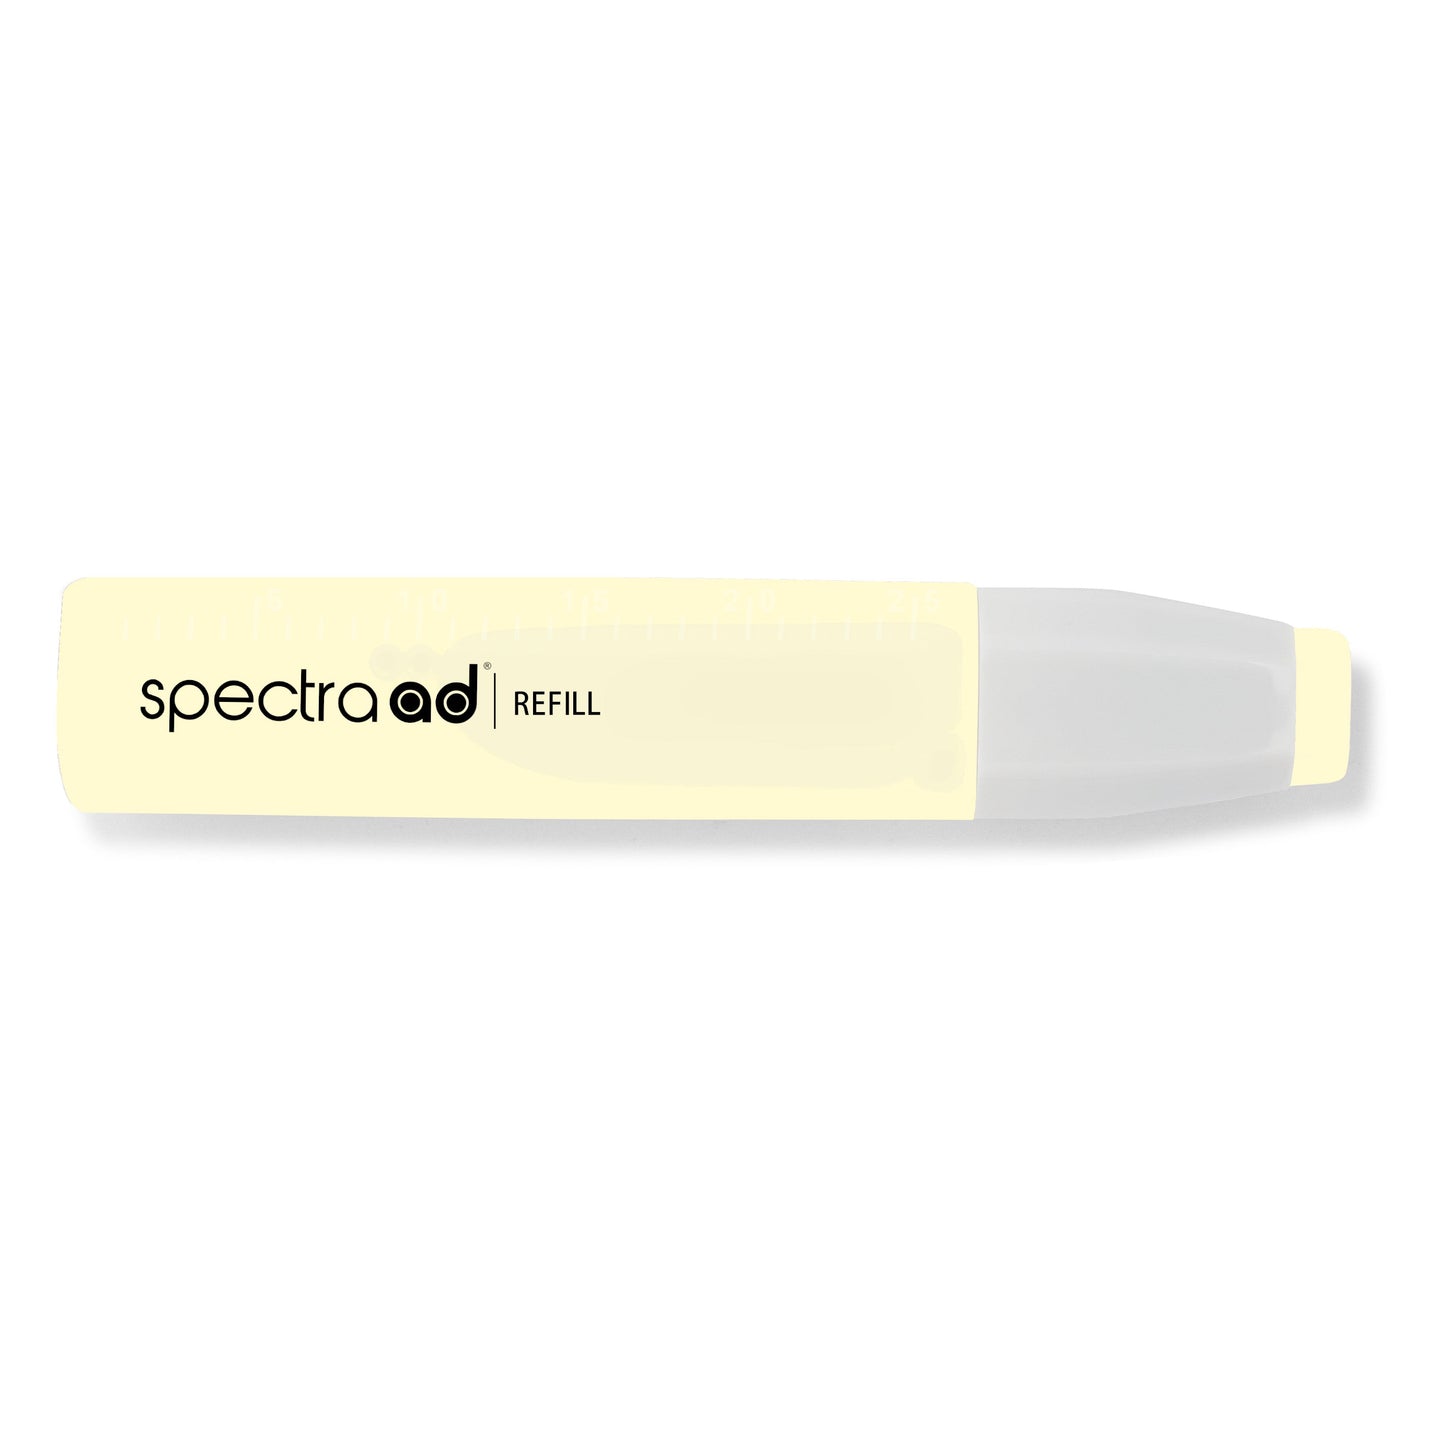 066 - Light Maize - Spectra AD Refill Bottle